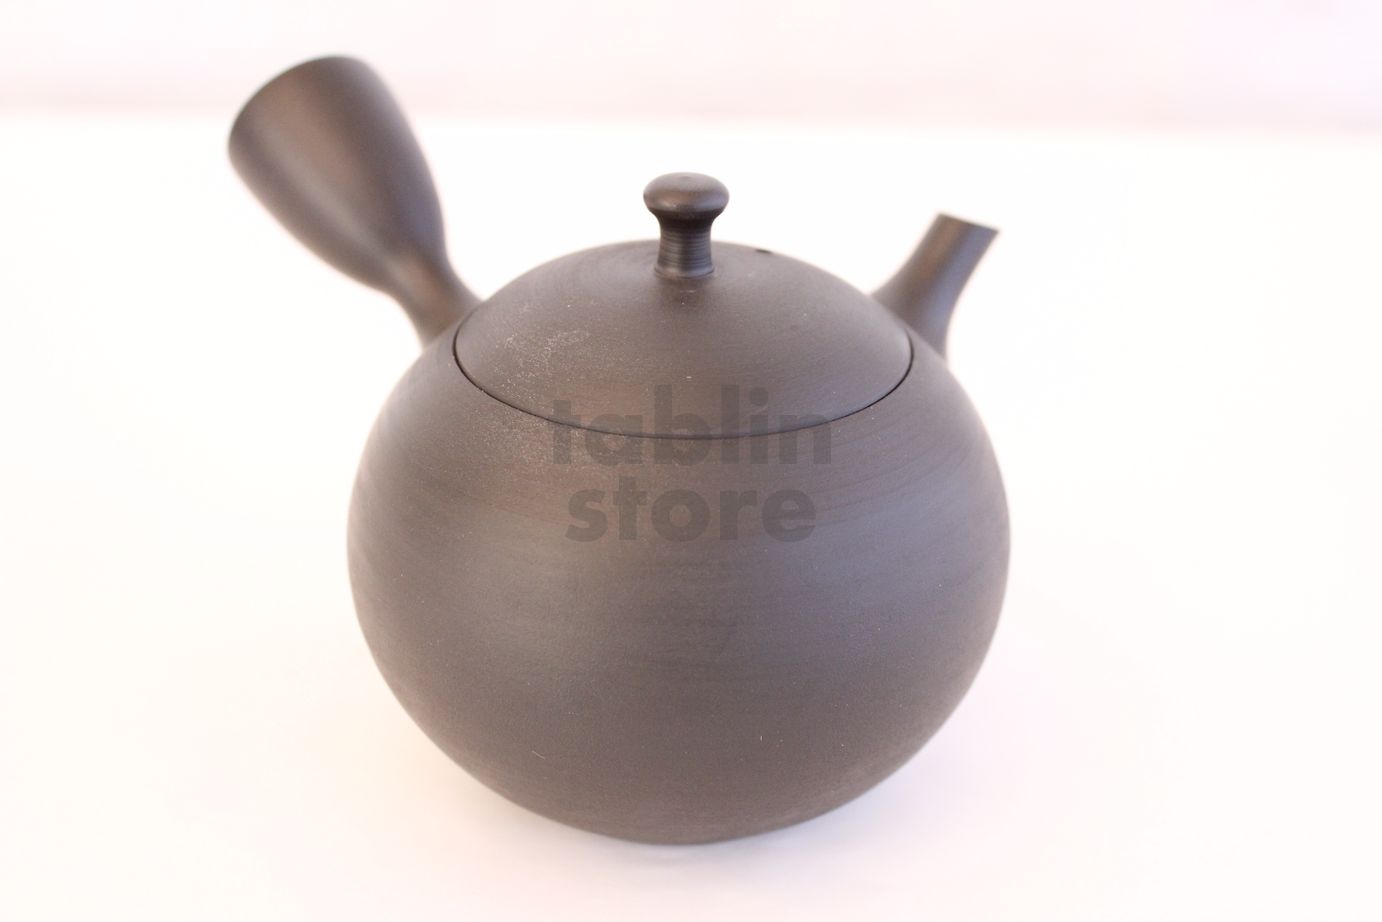 Japanese Small Tea Pot - Black